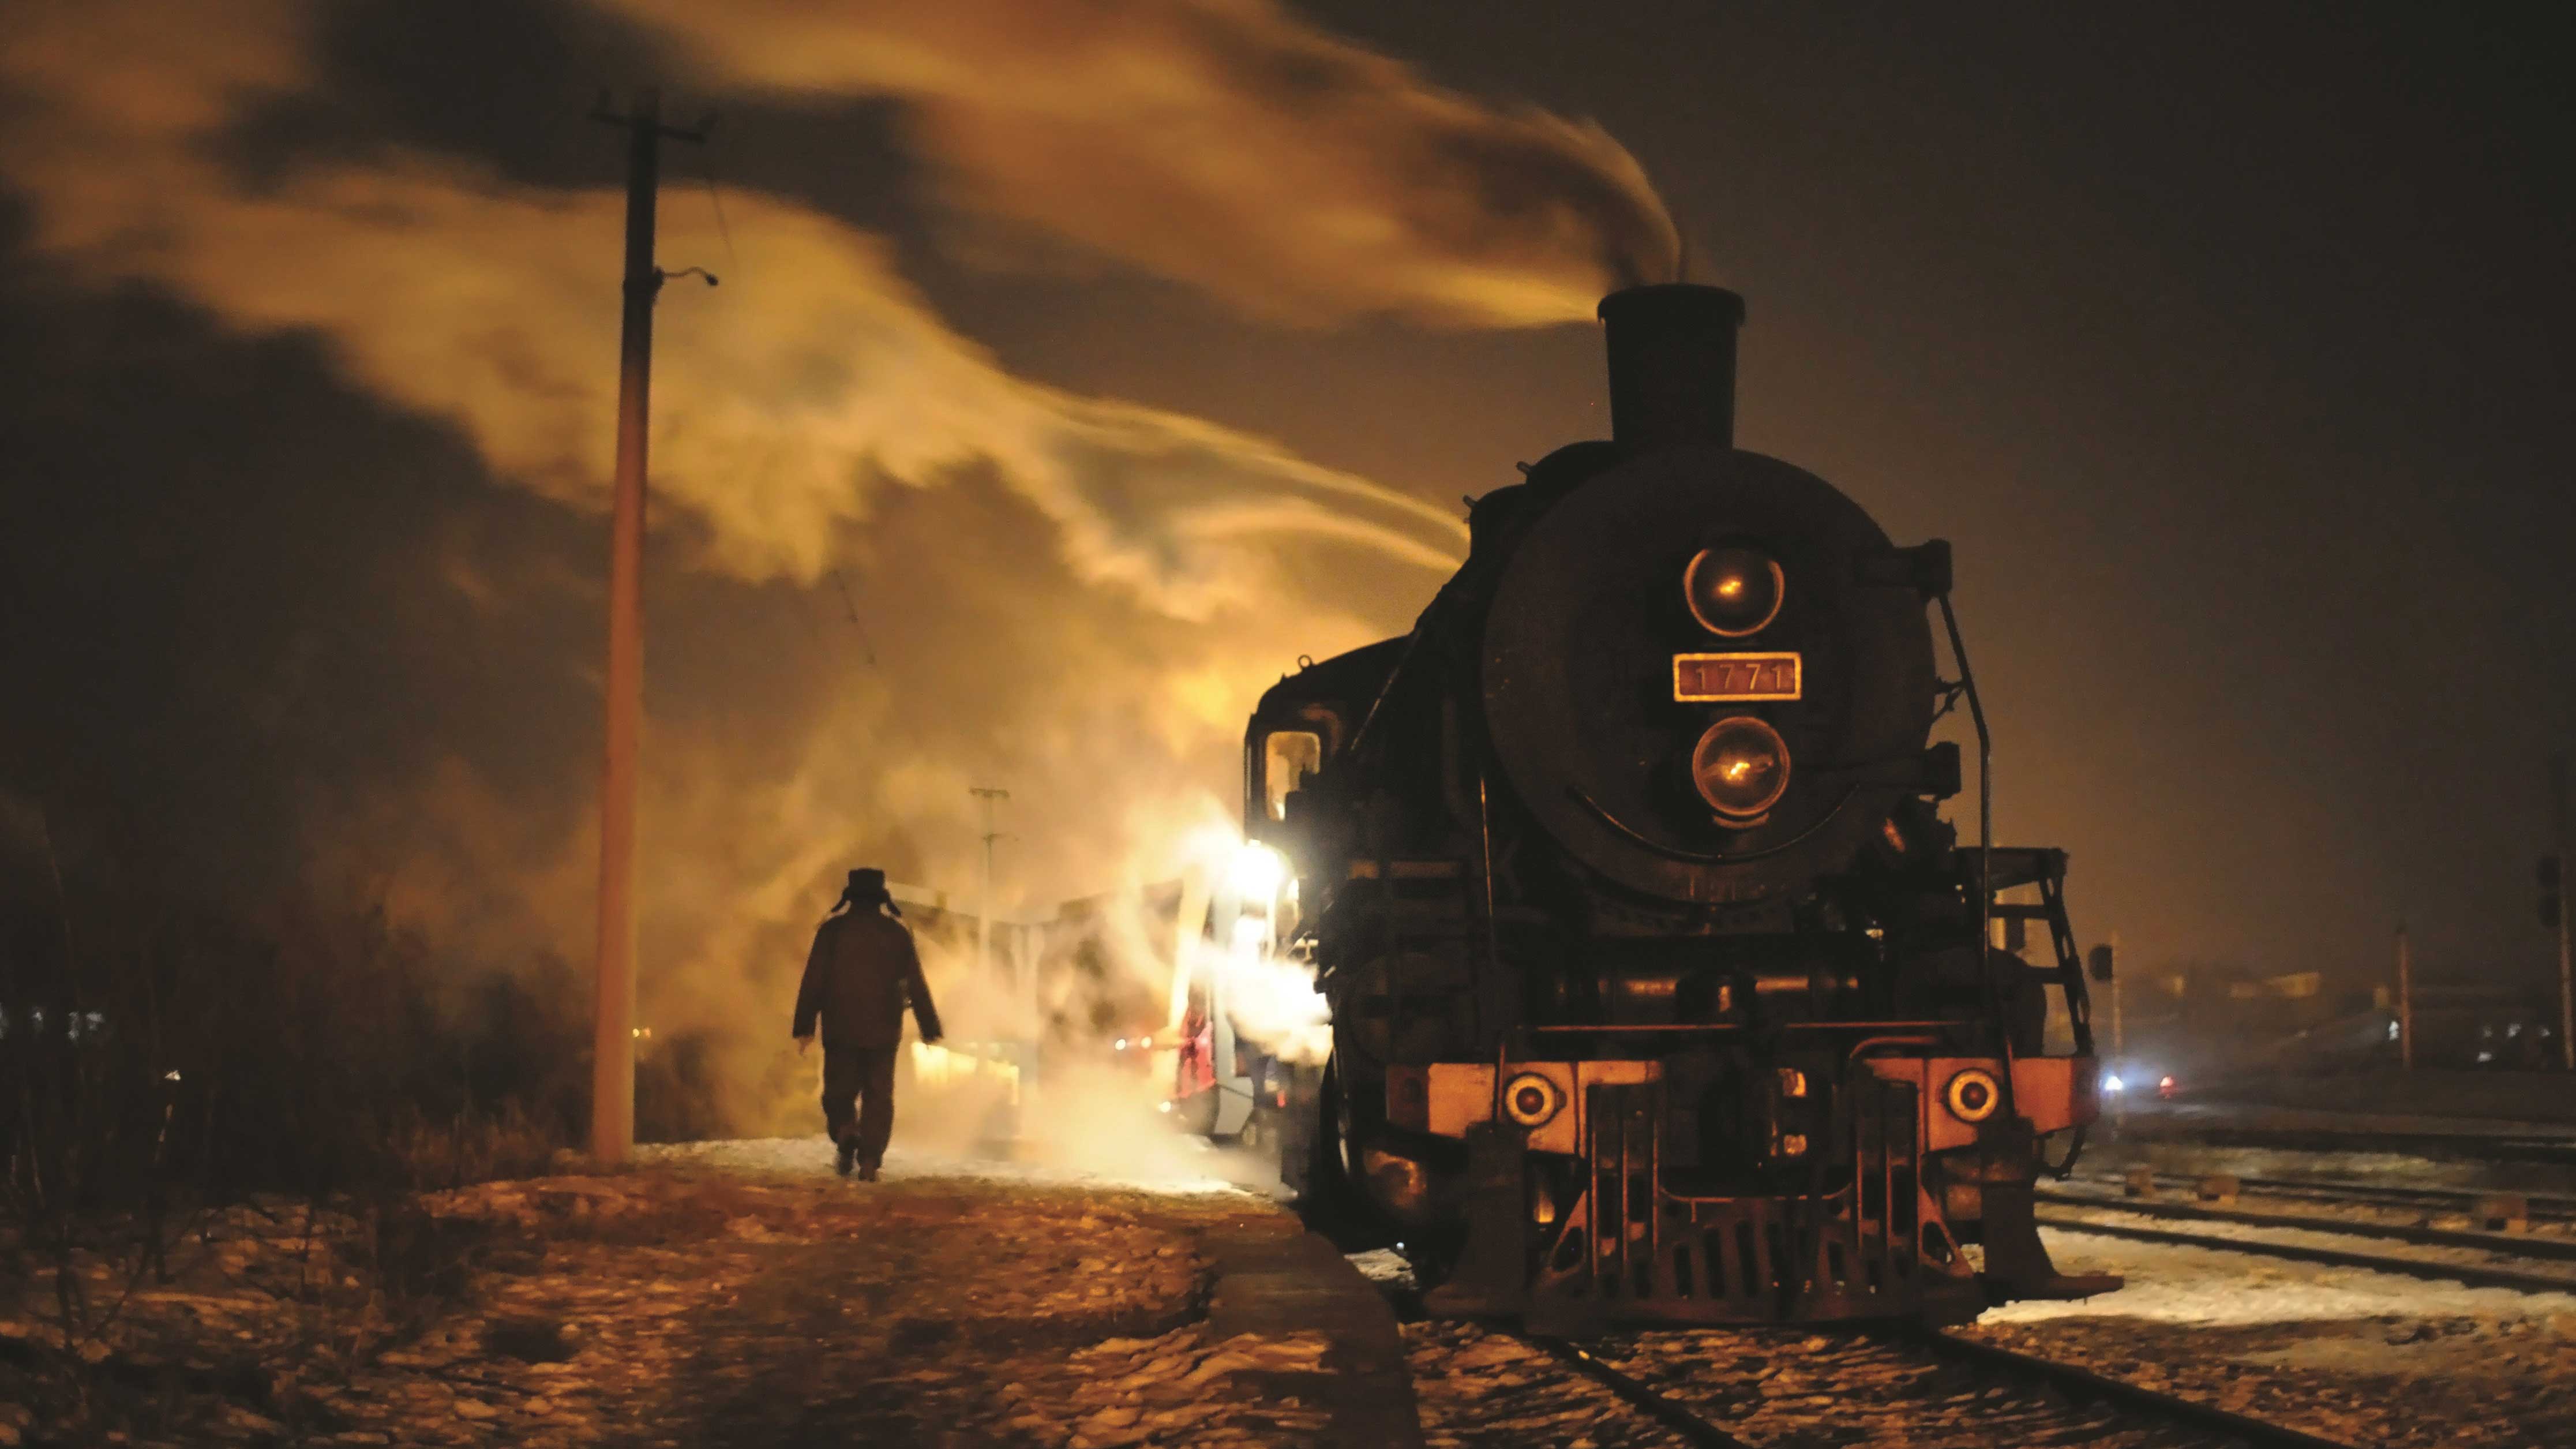 Night Train by Thomas F. Monteleone